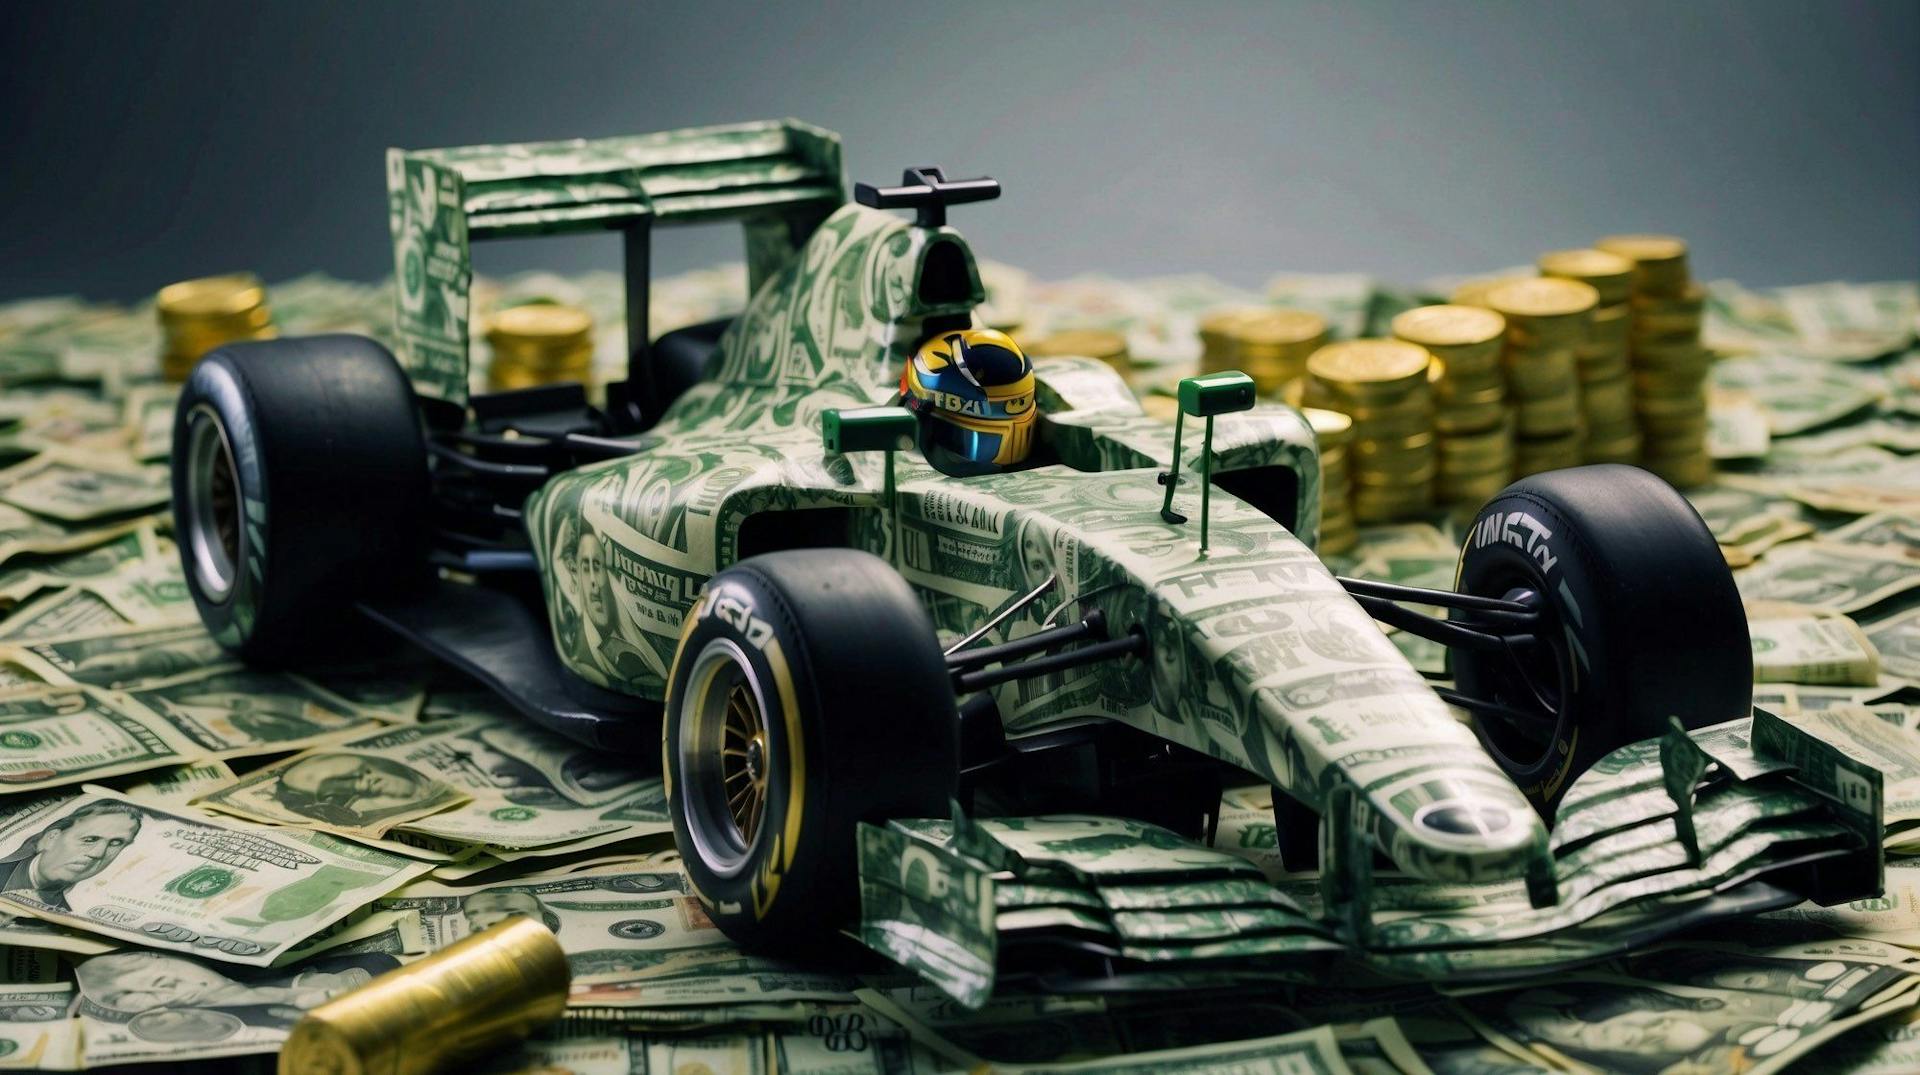 F1 Money car.jpg